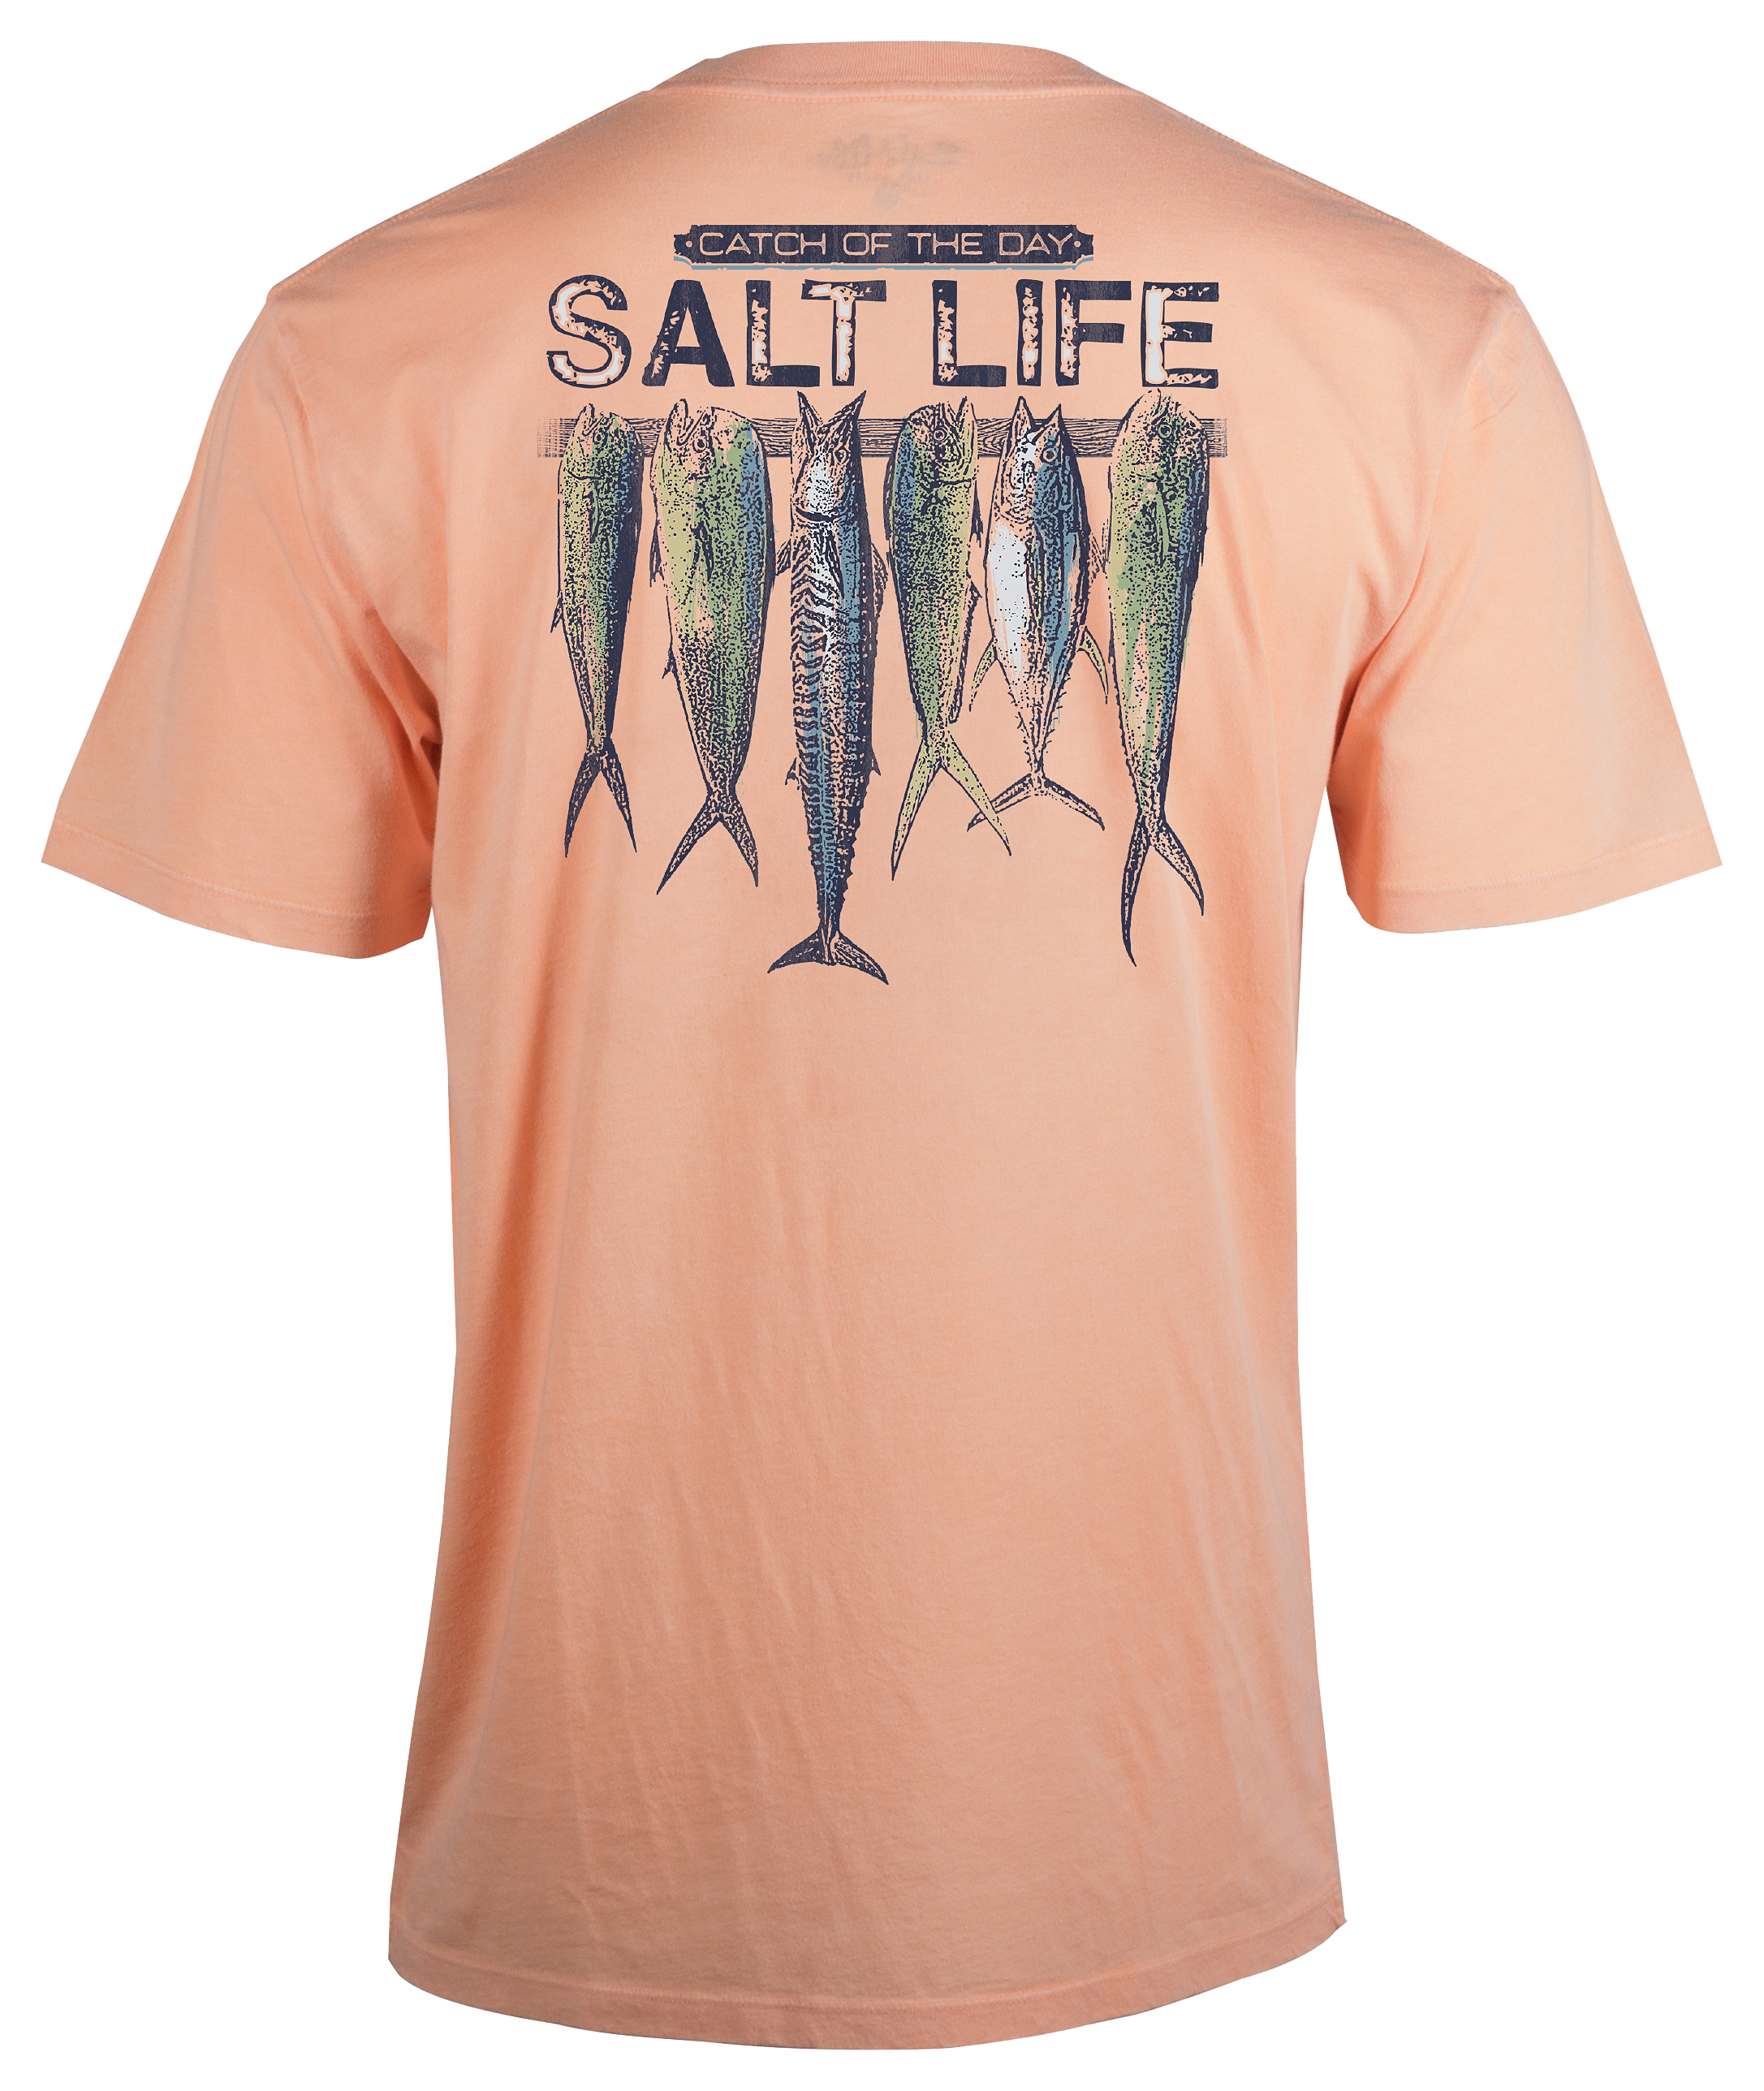 Salt Life Stringer Salt Wash Fishing Short-Sleeve Pocket T-Shirt for Men